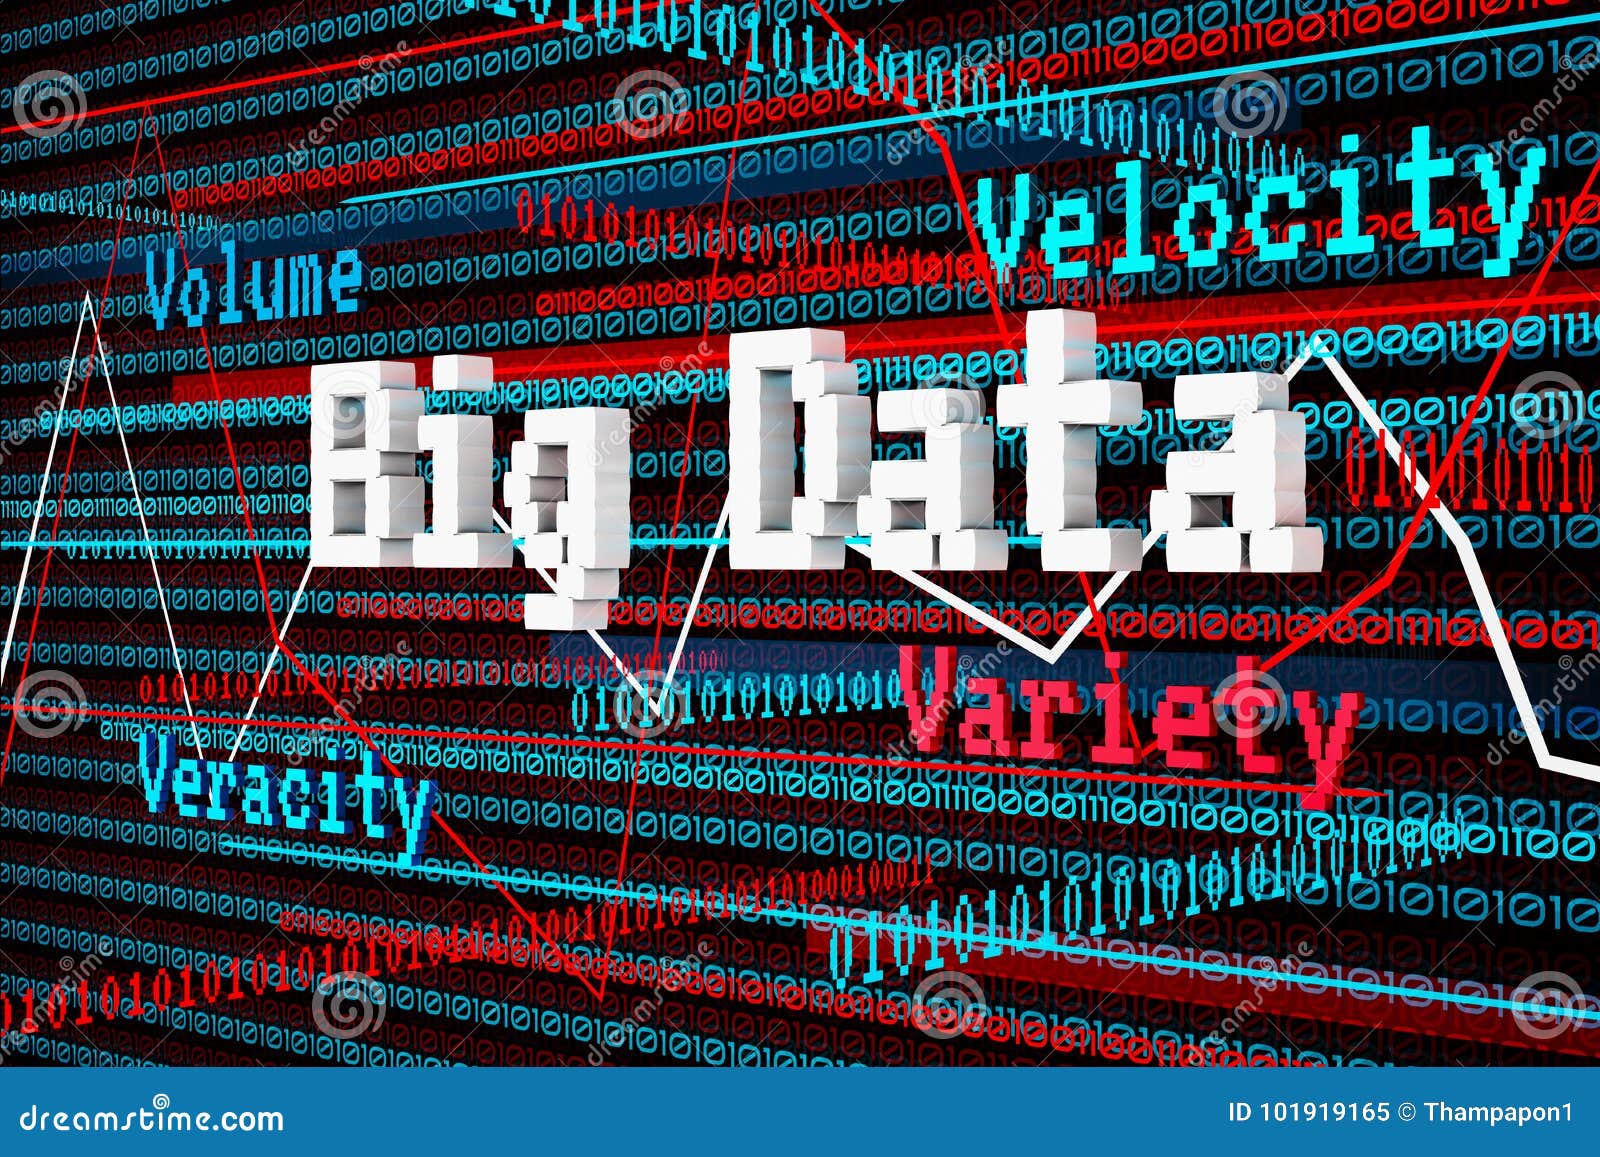 abstract 3d render big data, volume, velocity, variety, veracity